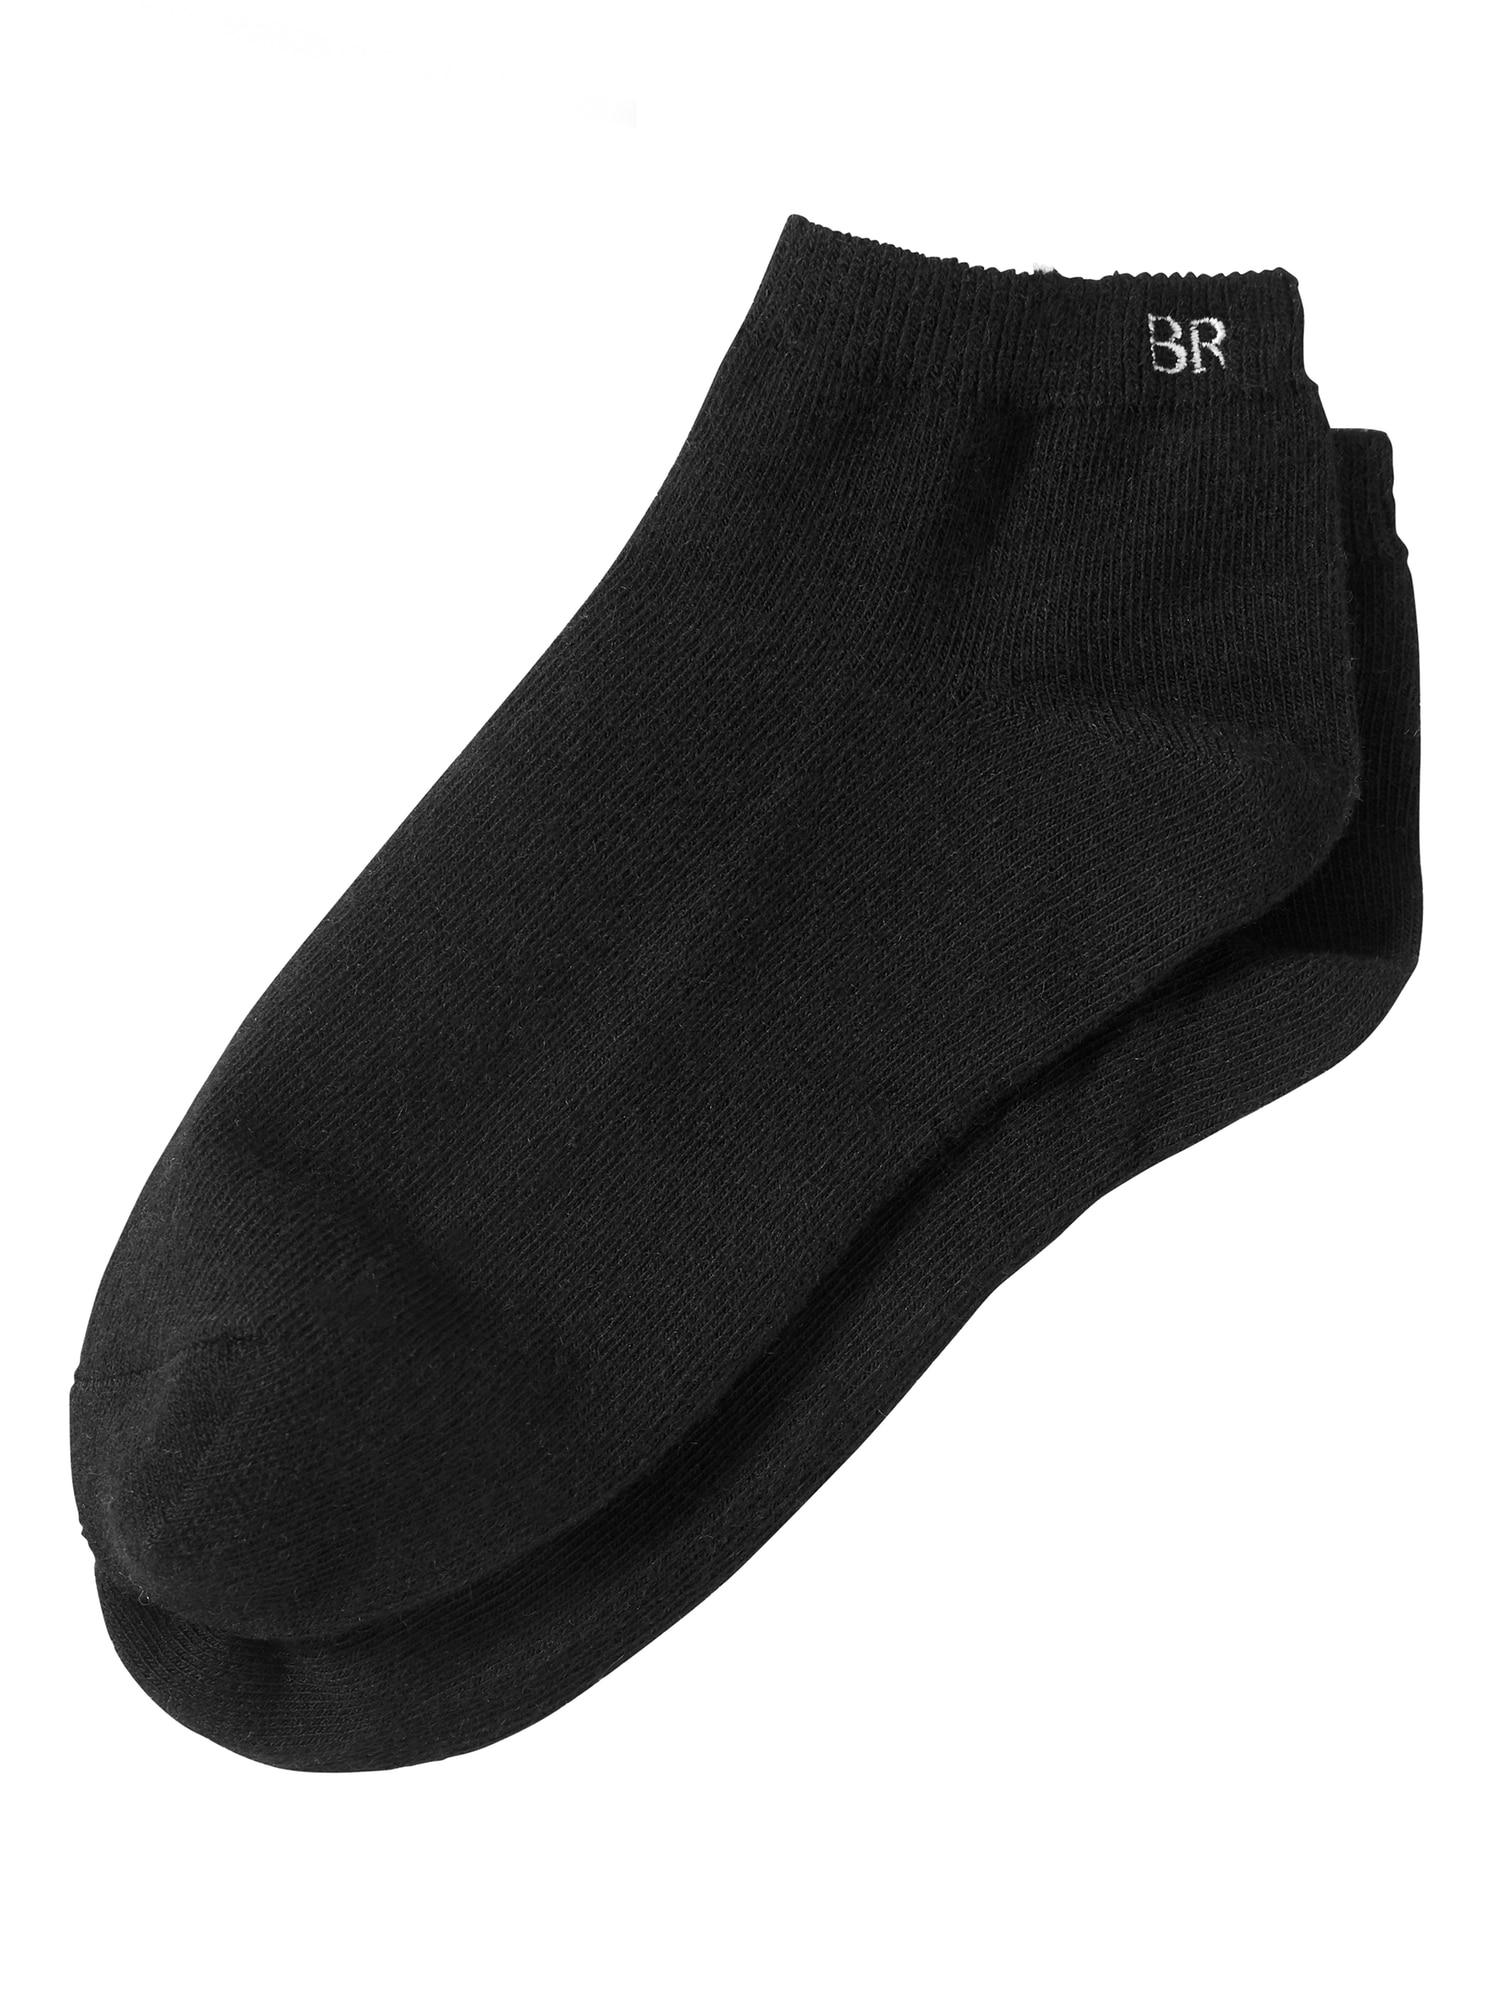 Banana Republic Cashmere-blend Bootie Sock in Black - Lyst